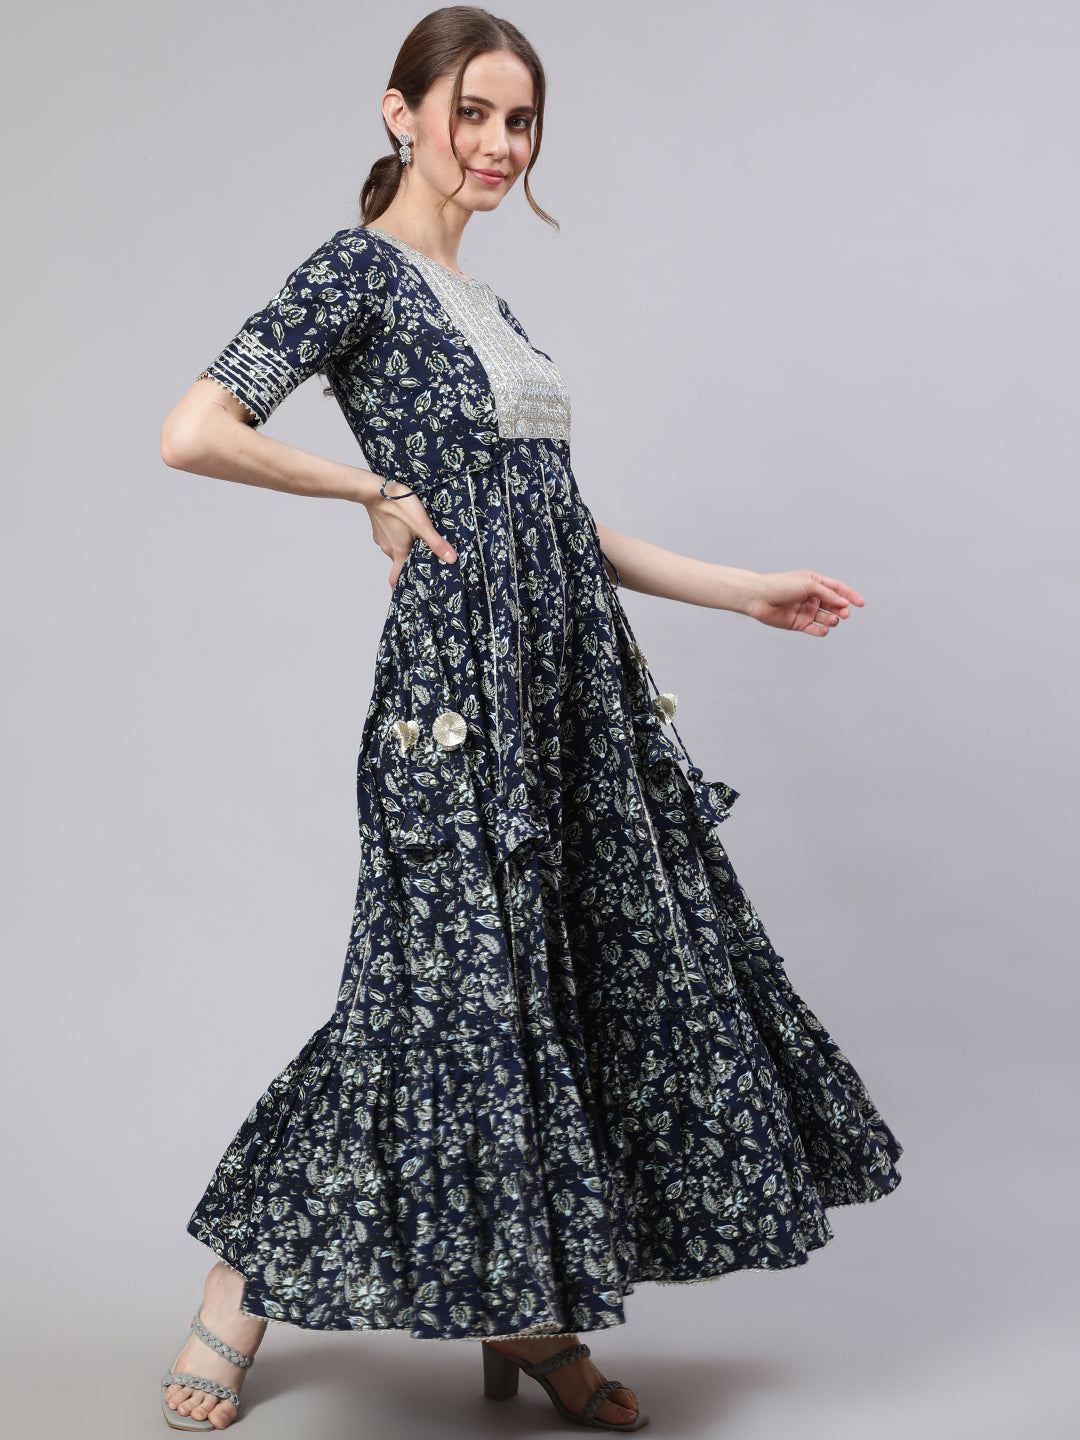 Navy Blue Floral Printed Maxi Dress